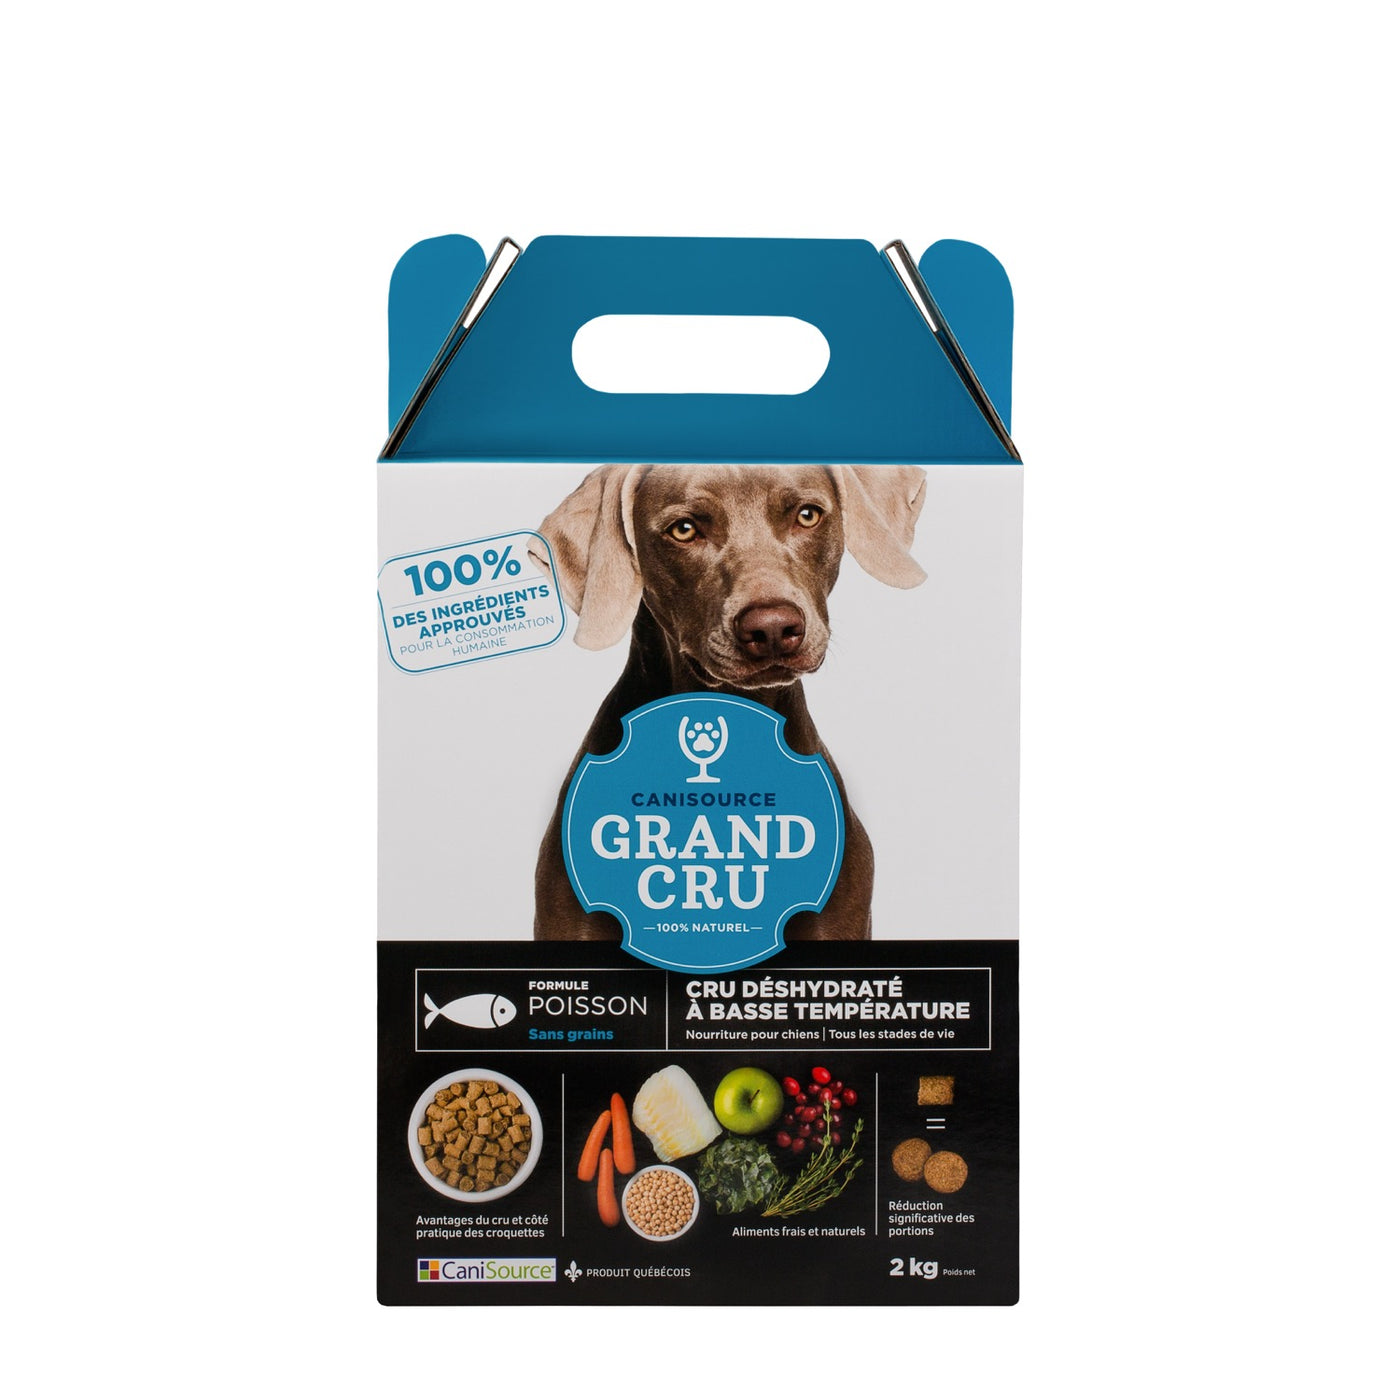 Grand Cru - Fish Grain-Free Dehydrated Dog Food